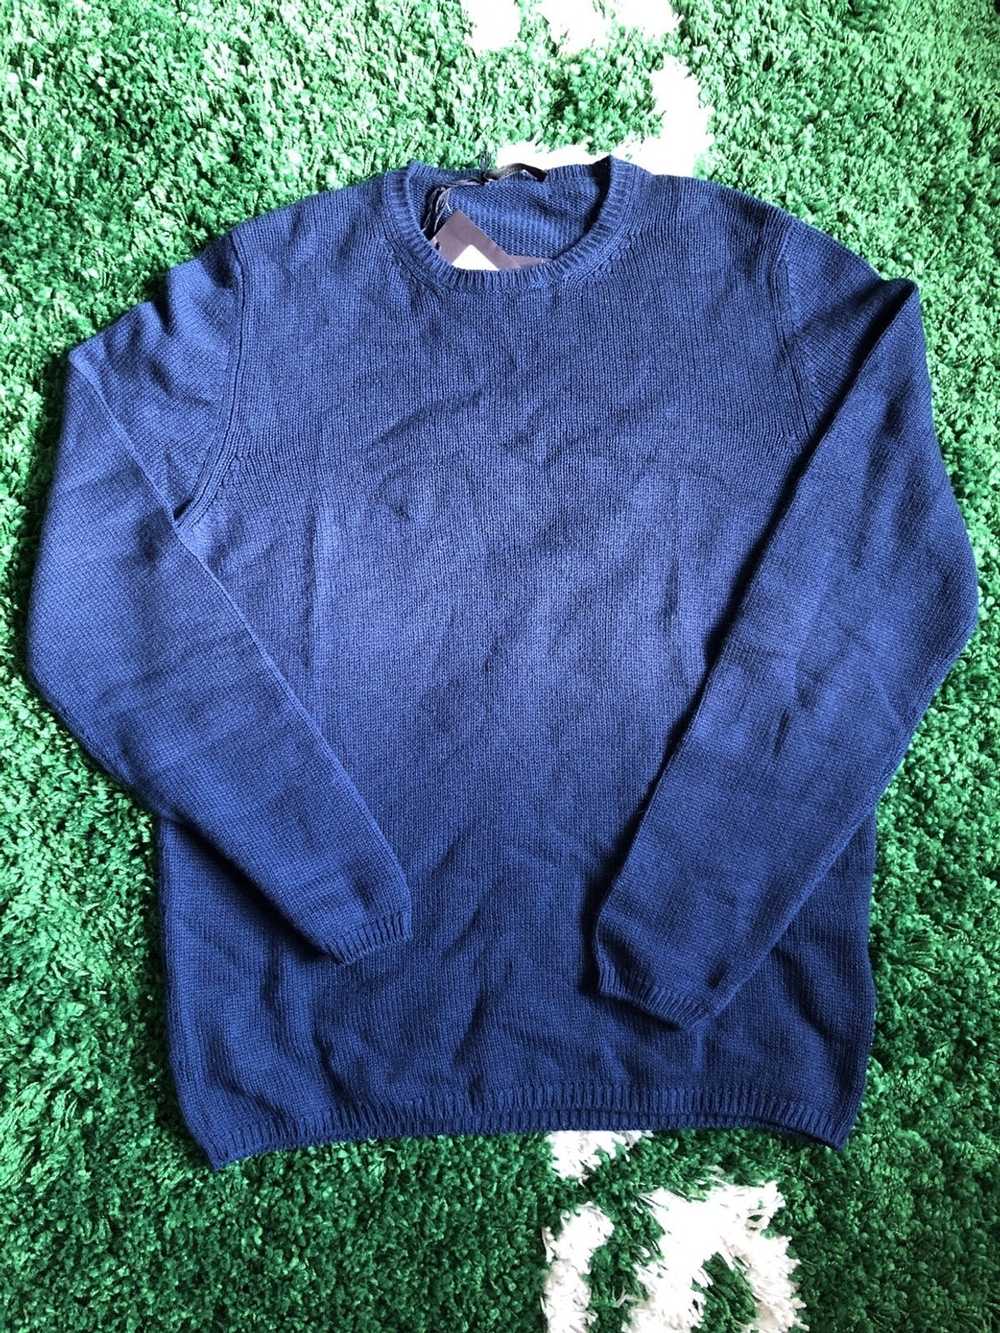 Prada Blue 100% cashmere sweater - image 1